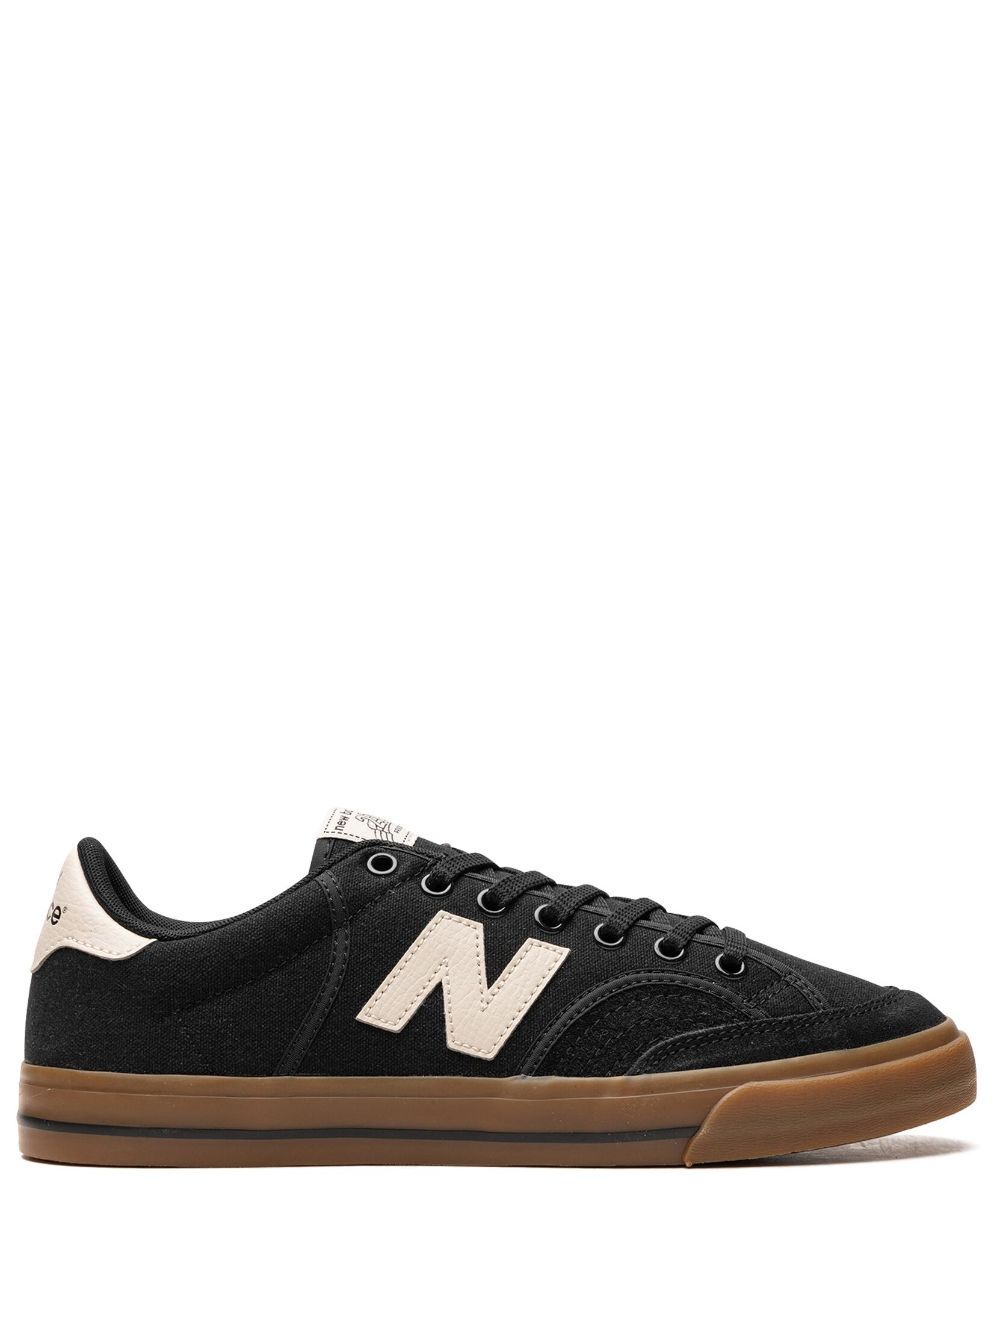 New Balance Numeric 212 Pro Court "Black/Timberwolf Gum" sneakers von New Balance